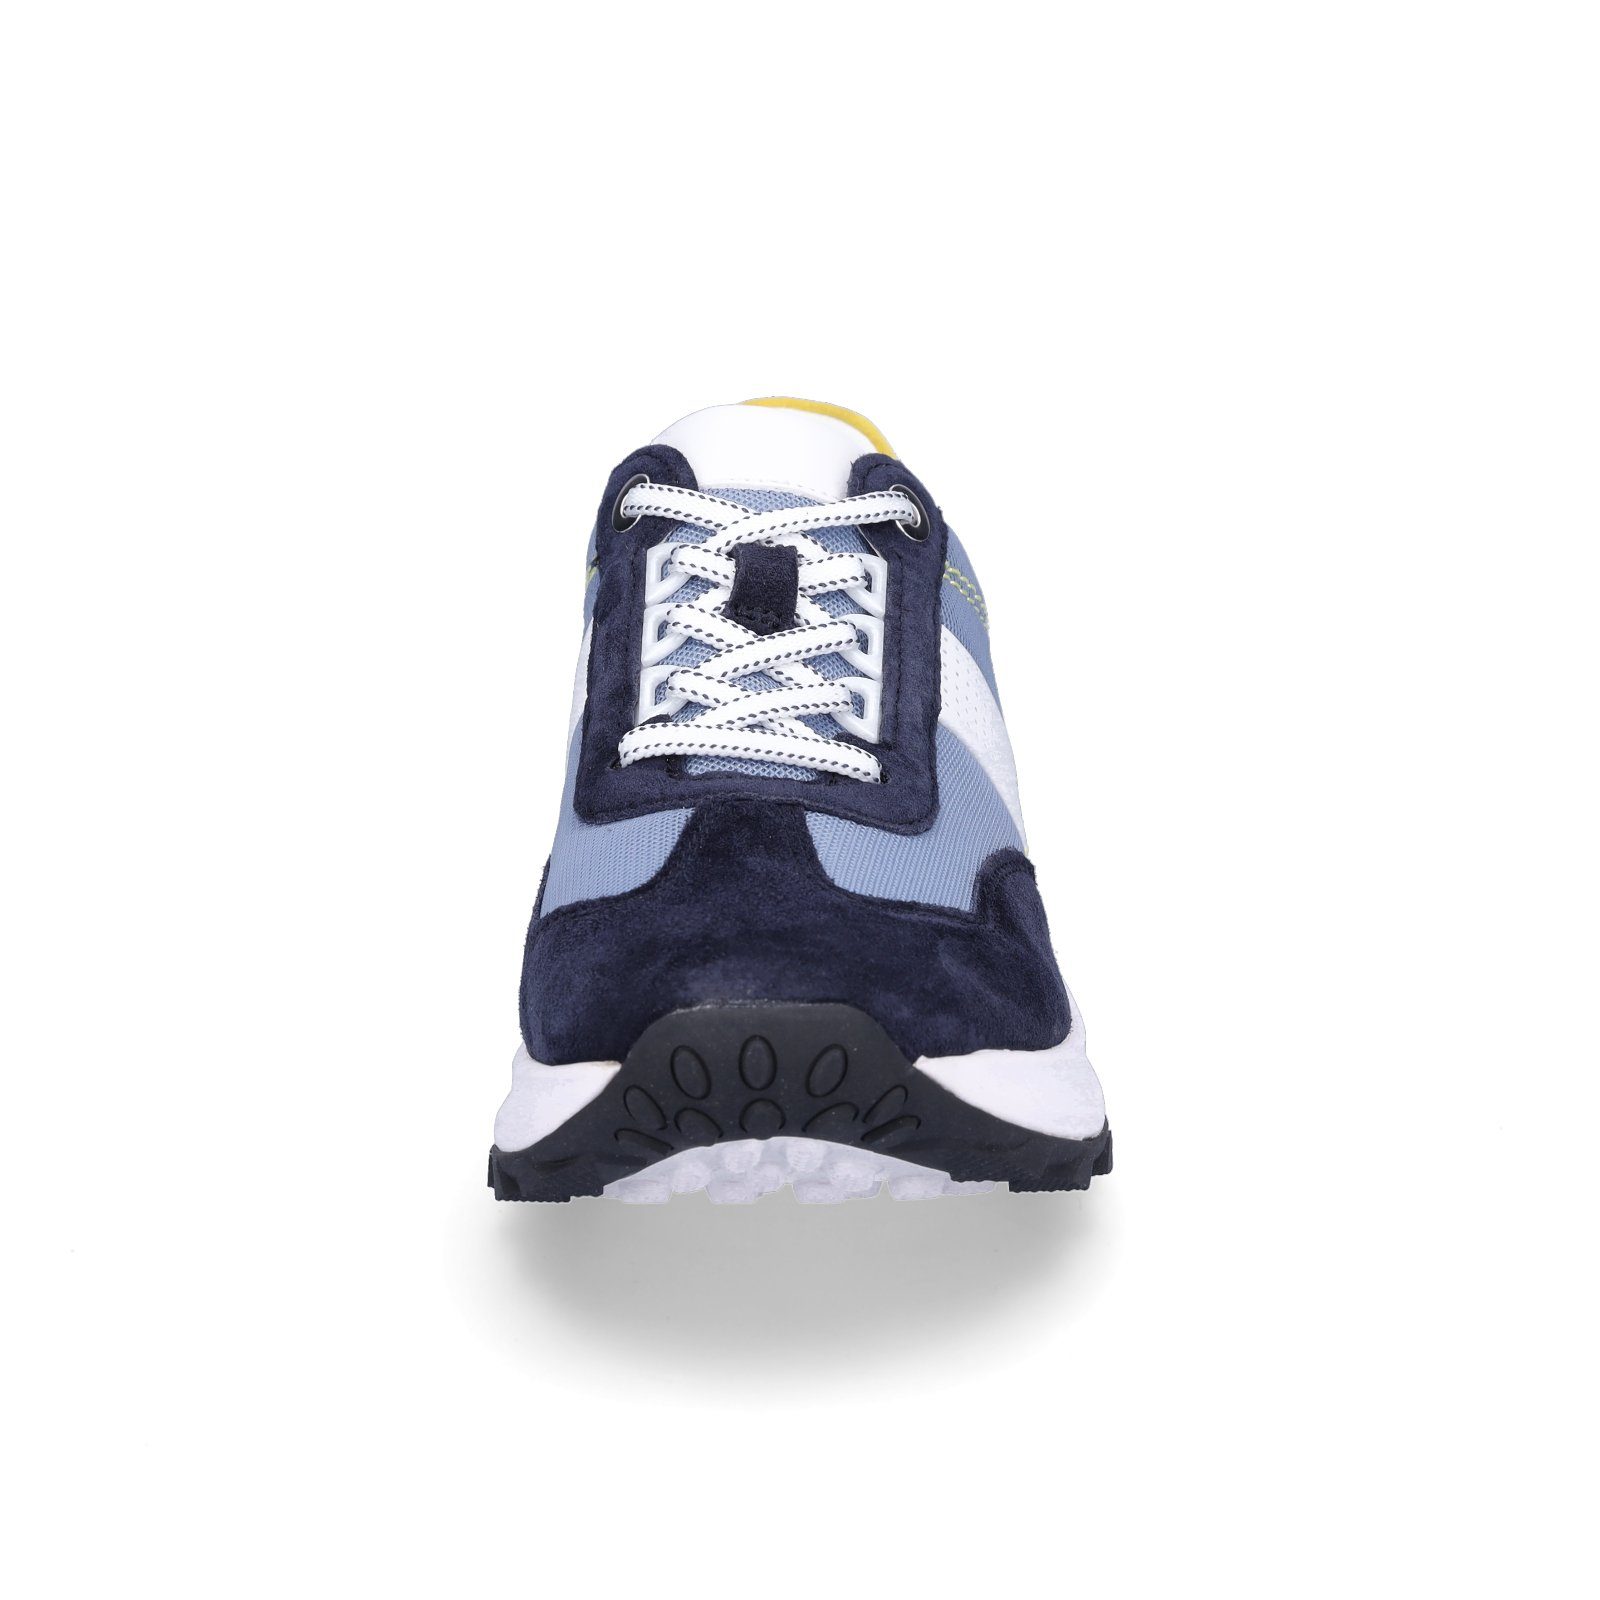 Damen (marine/azur/white/yellow Mehrfarbig / Gabor Gabor blau Gabor 36) Sneaker Rollingsoft Sneaker